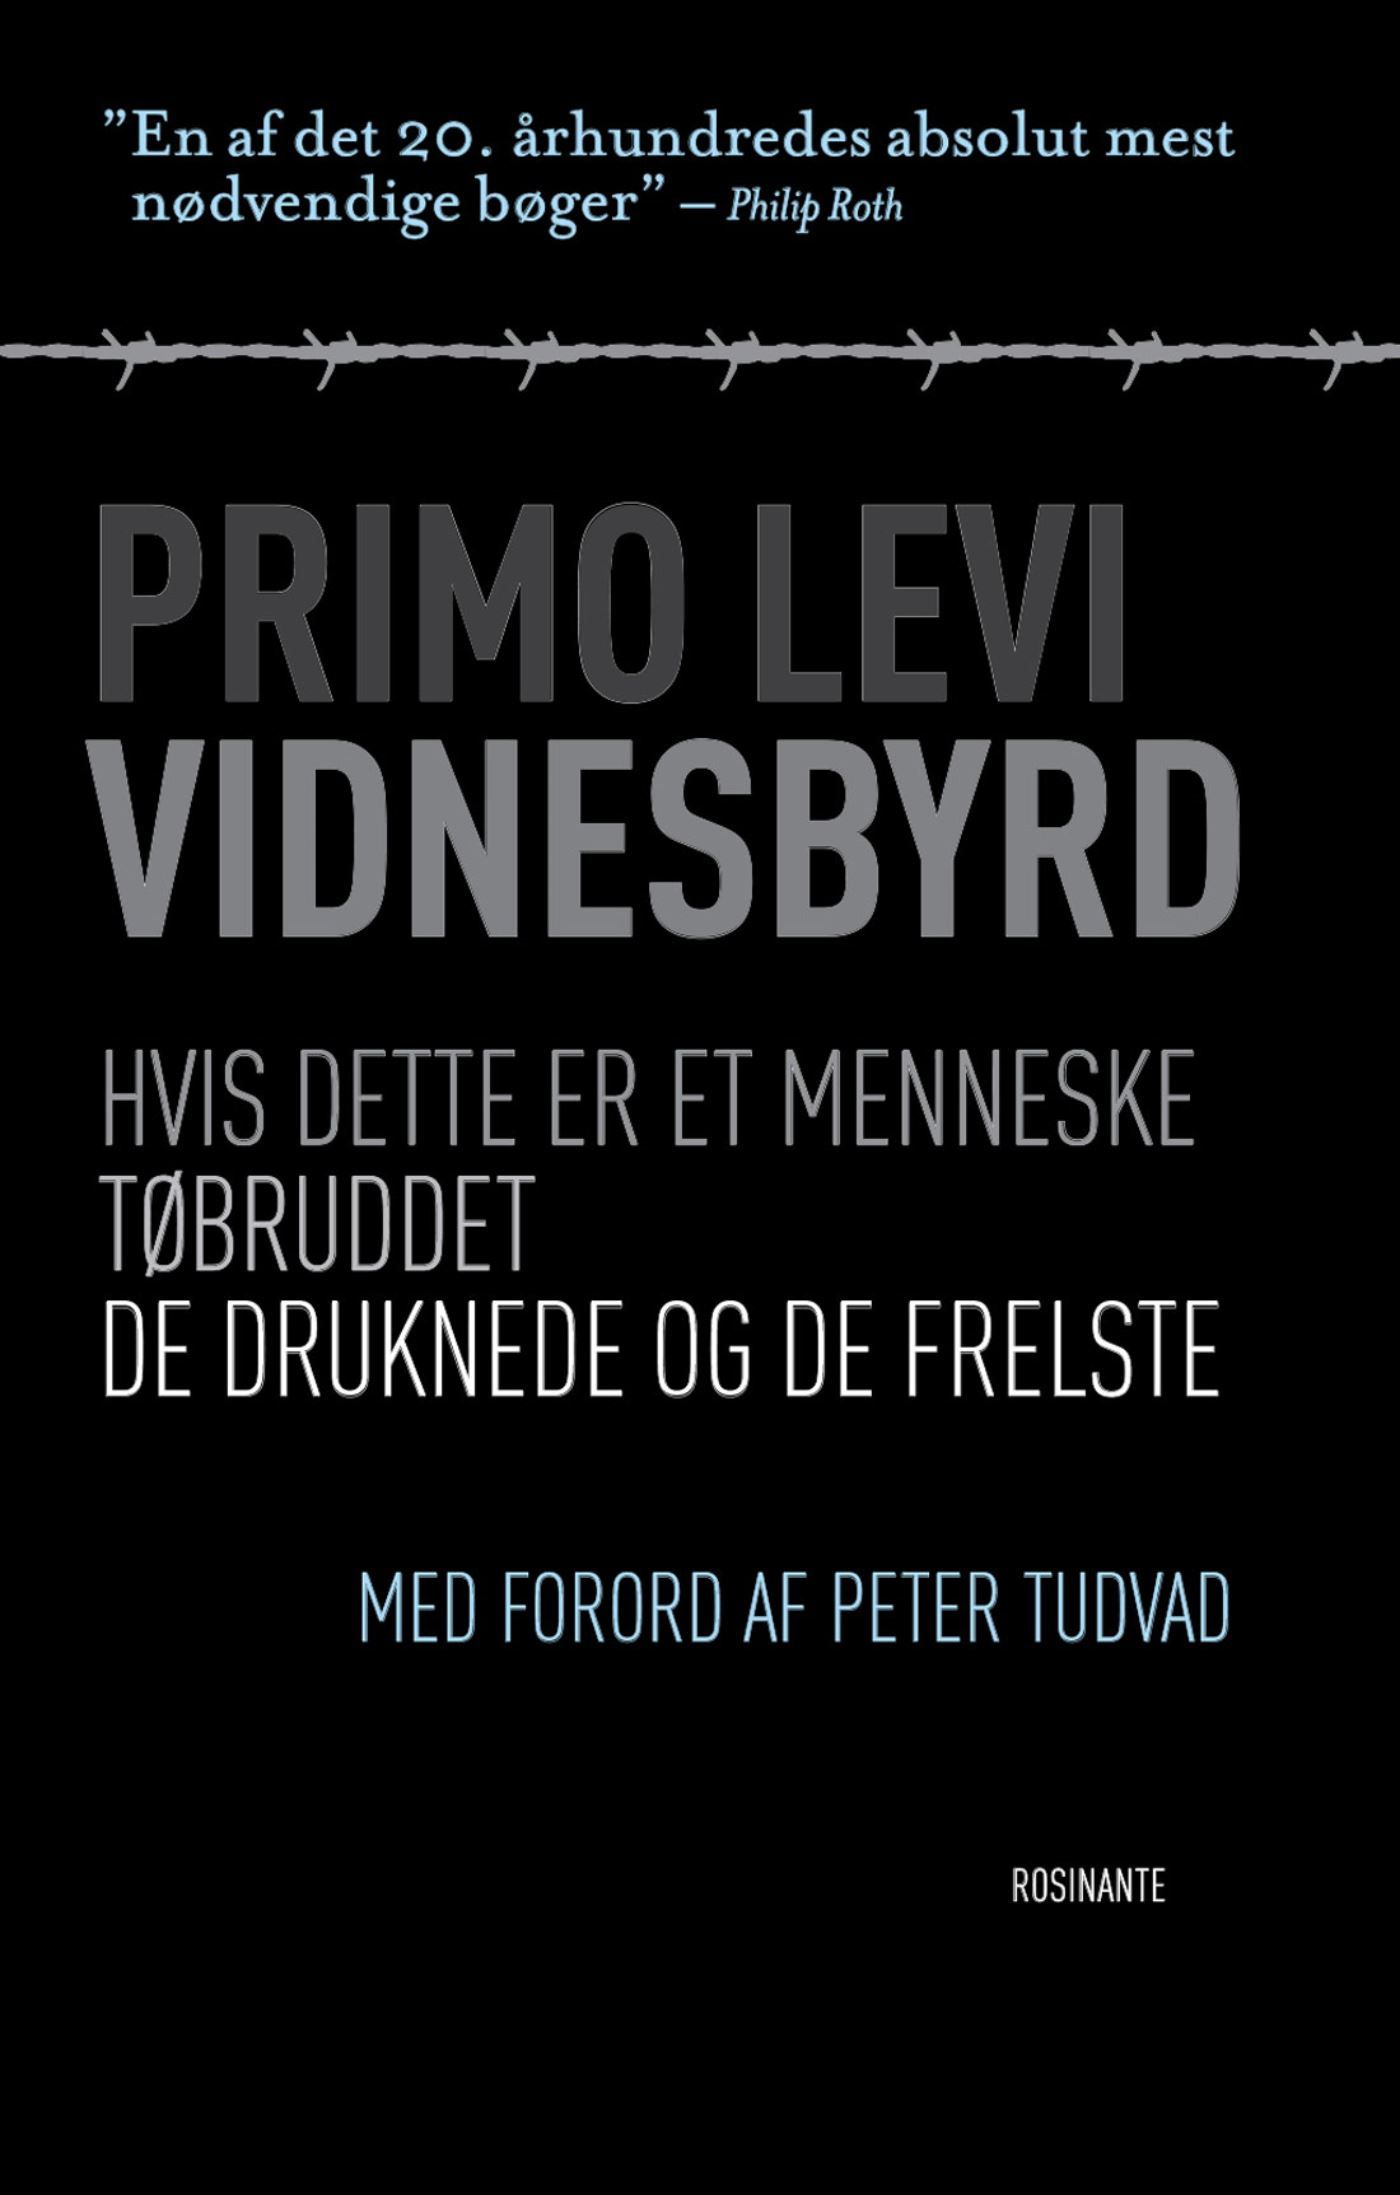 Vidnesbyrd, e-bok av Primo Levi